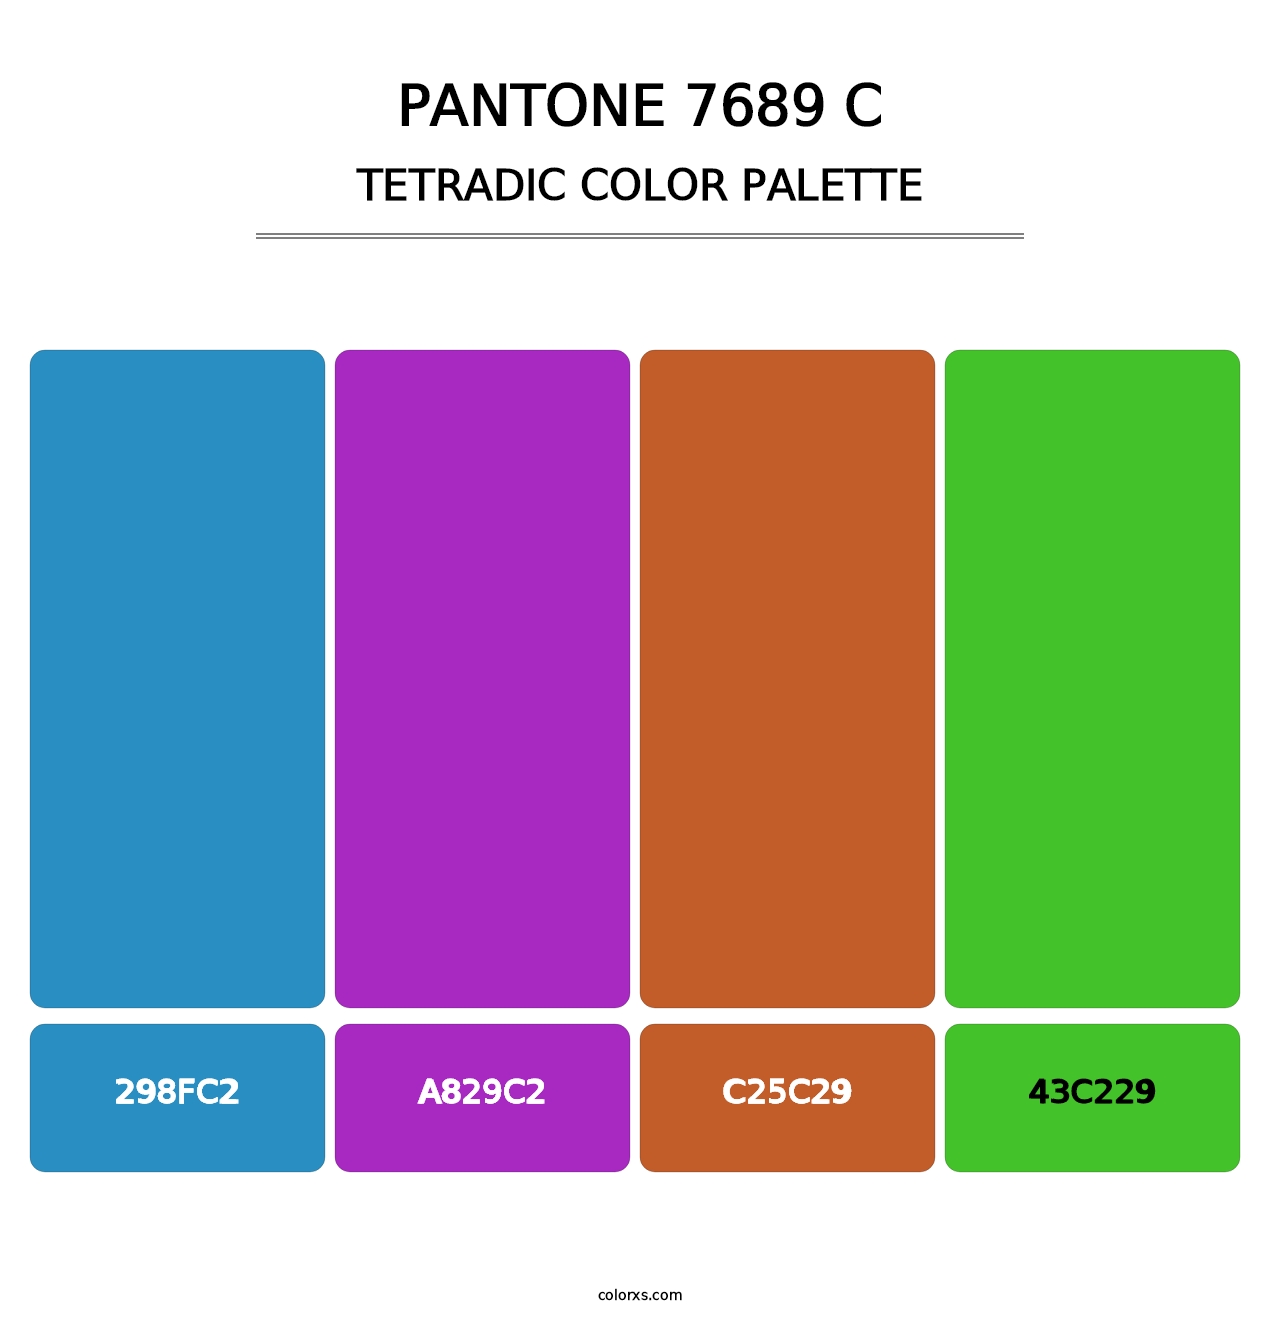 PANTONE 7689 C - Tetradic Color Palette